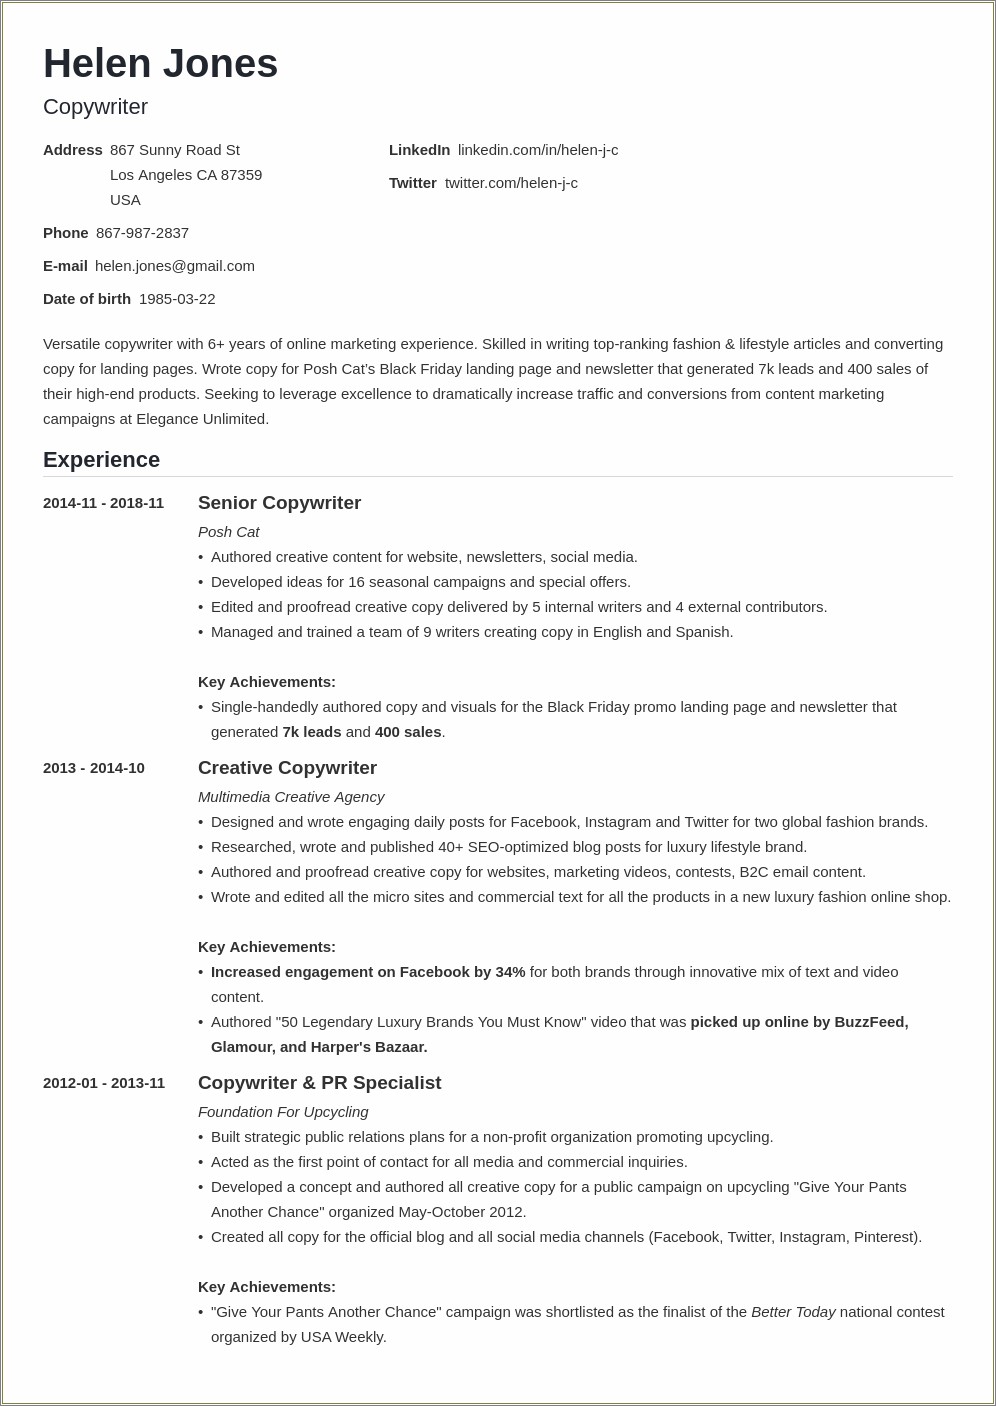 Resume Format For Writing Job